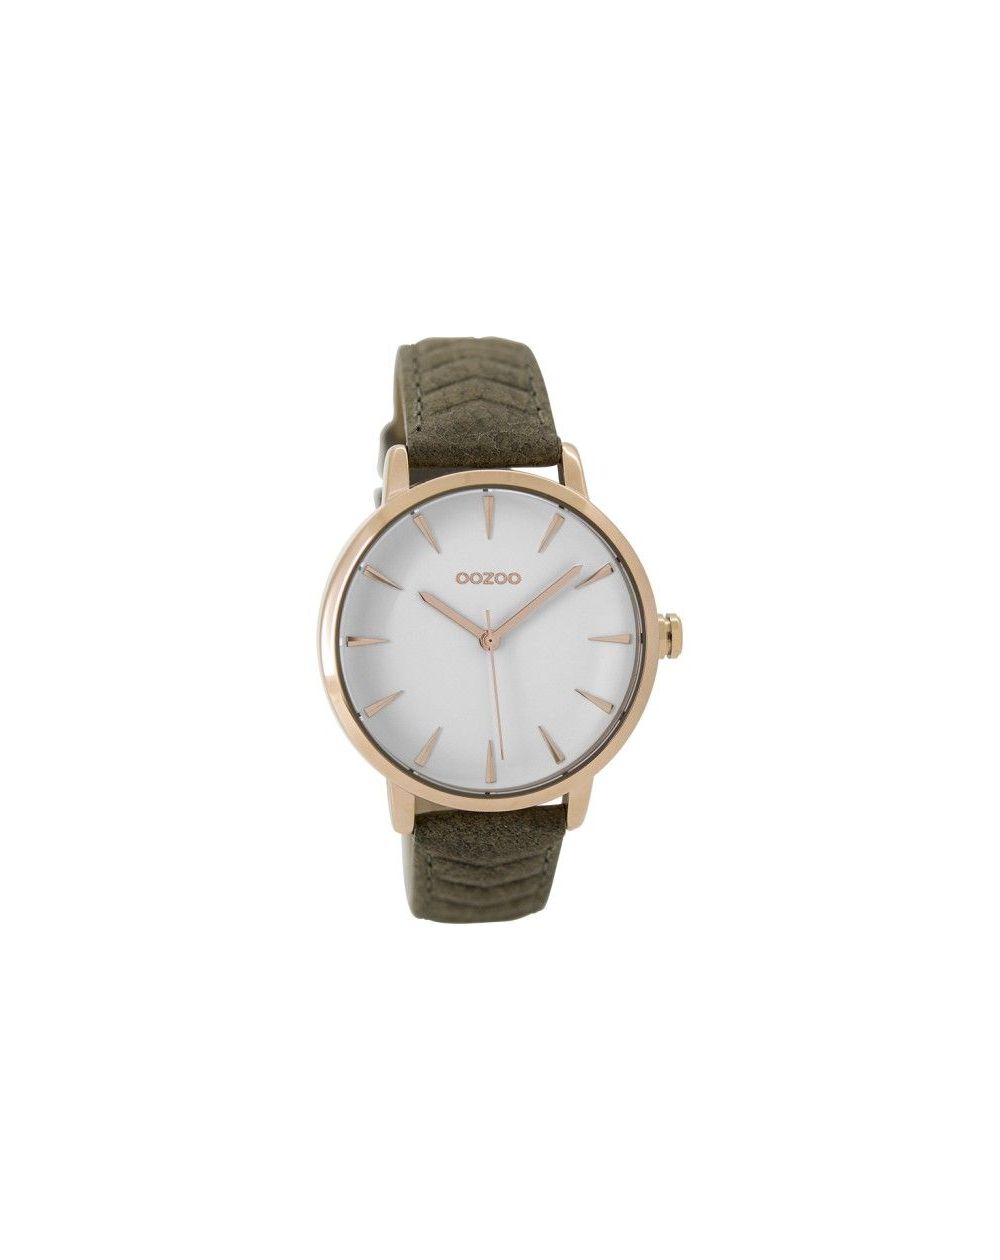 Montre Oozoo Timepieces C9509 brownblack/white - Marque montre Oozoo